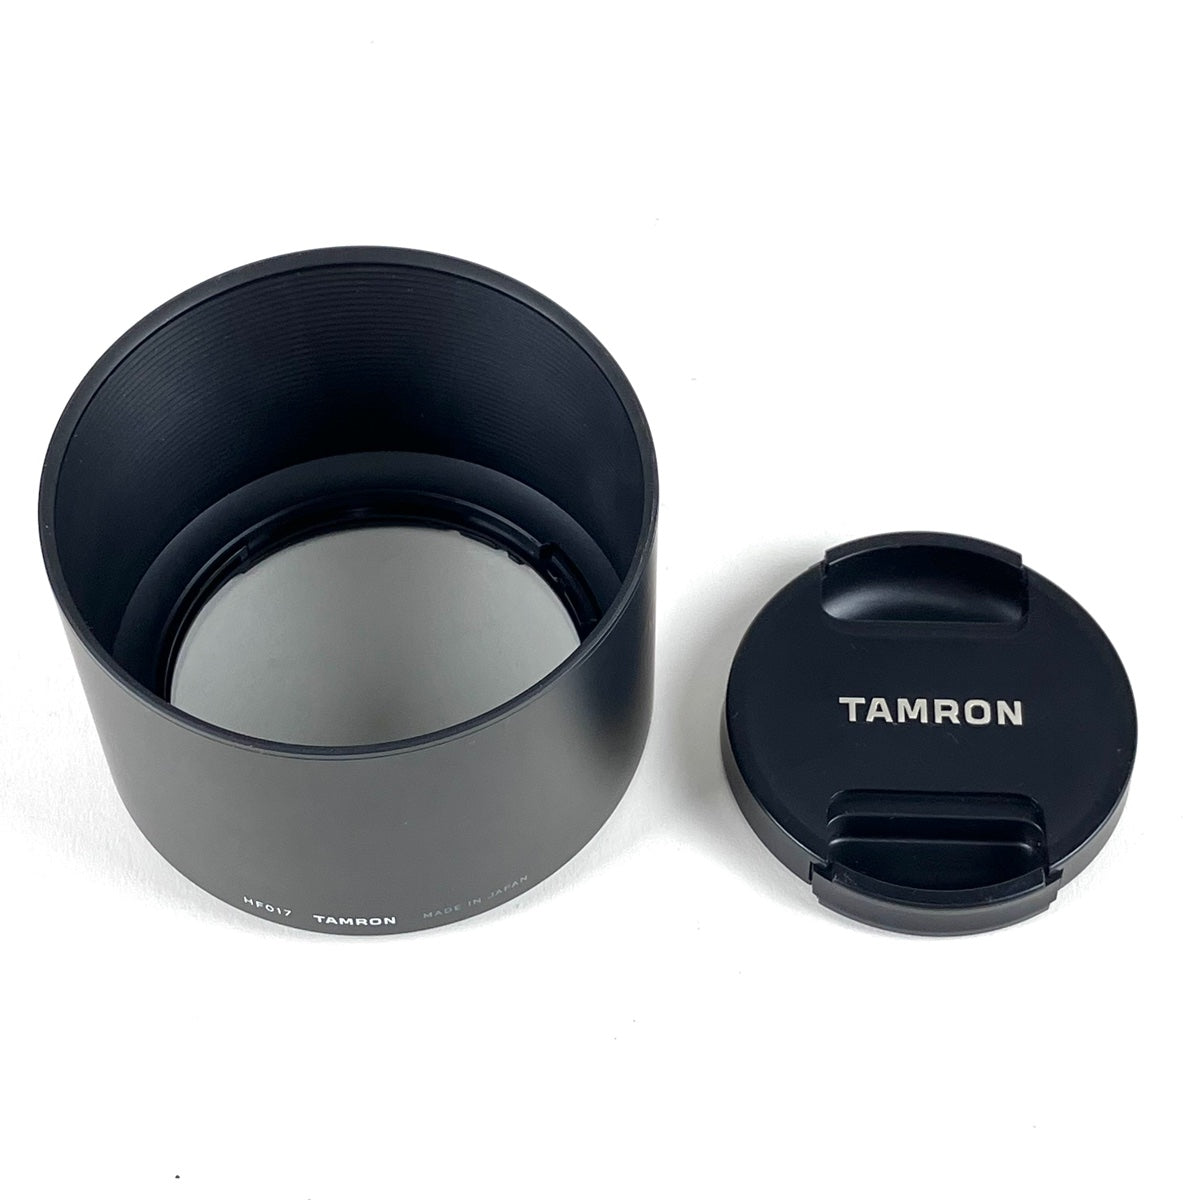 TAMRON(タムロン) SP 90mm F2.8 Di MACRO 1:1 VC USD (F017) (Nikon用)〔305-ud〕  交換レンズ